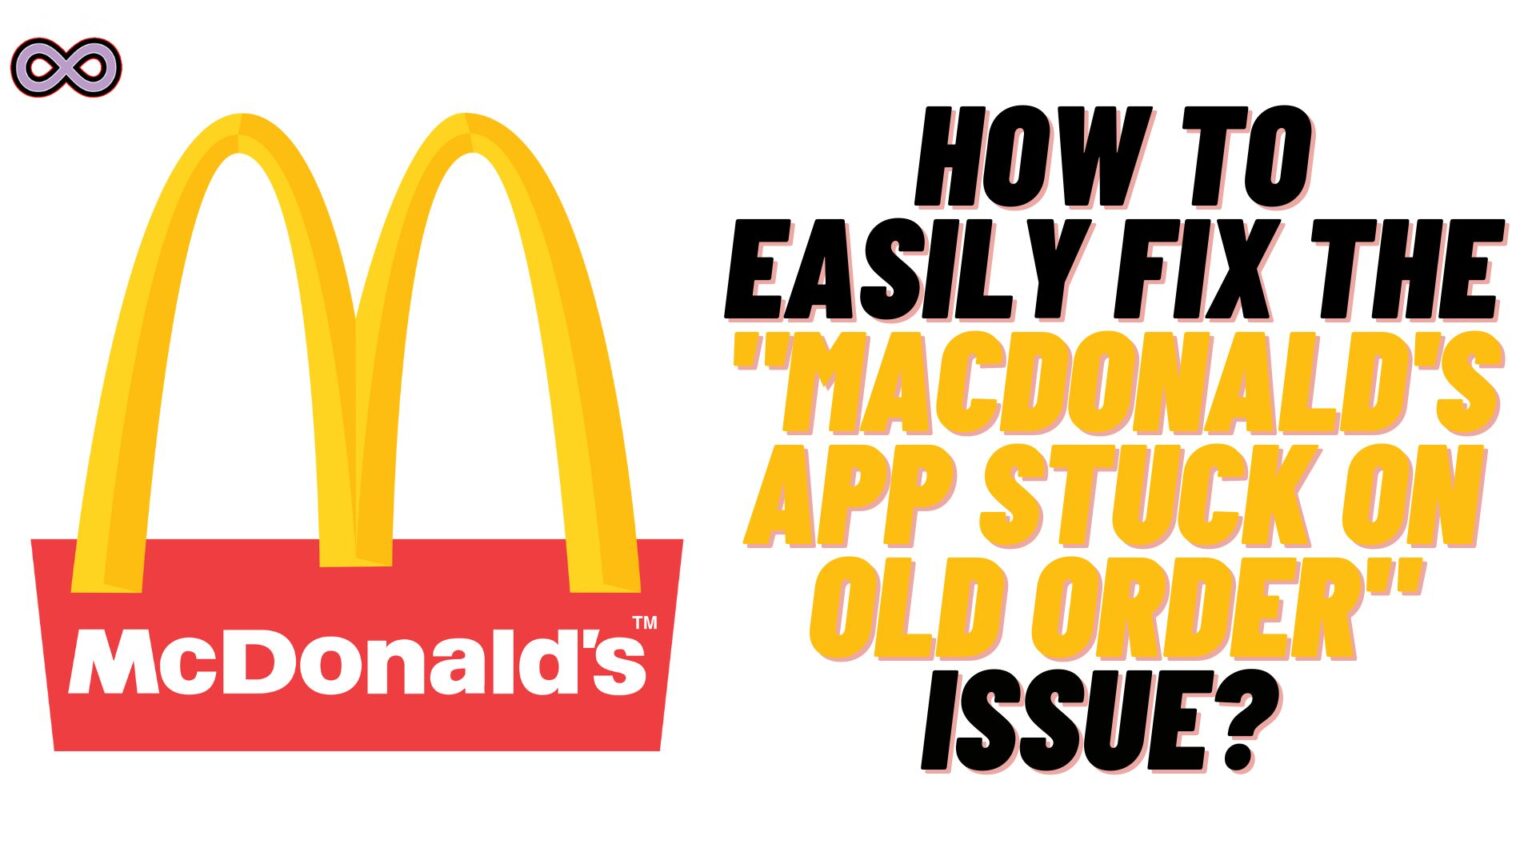 Macdonald's App Stuck on Old Order